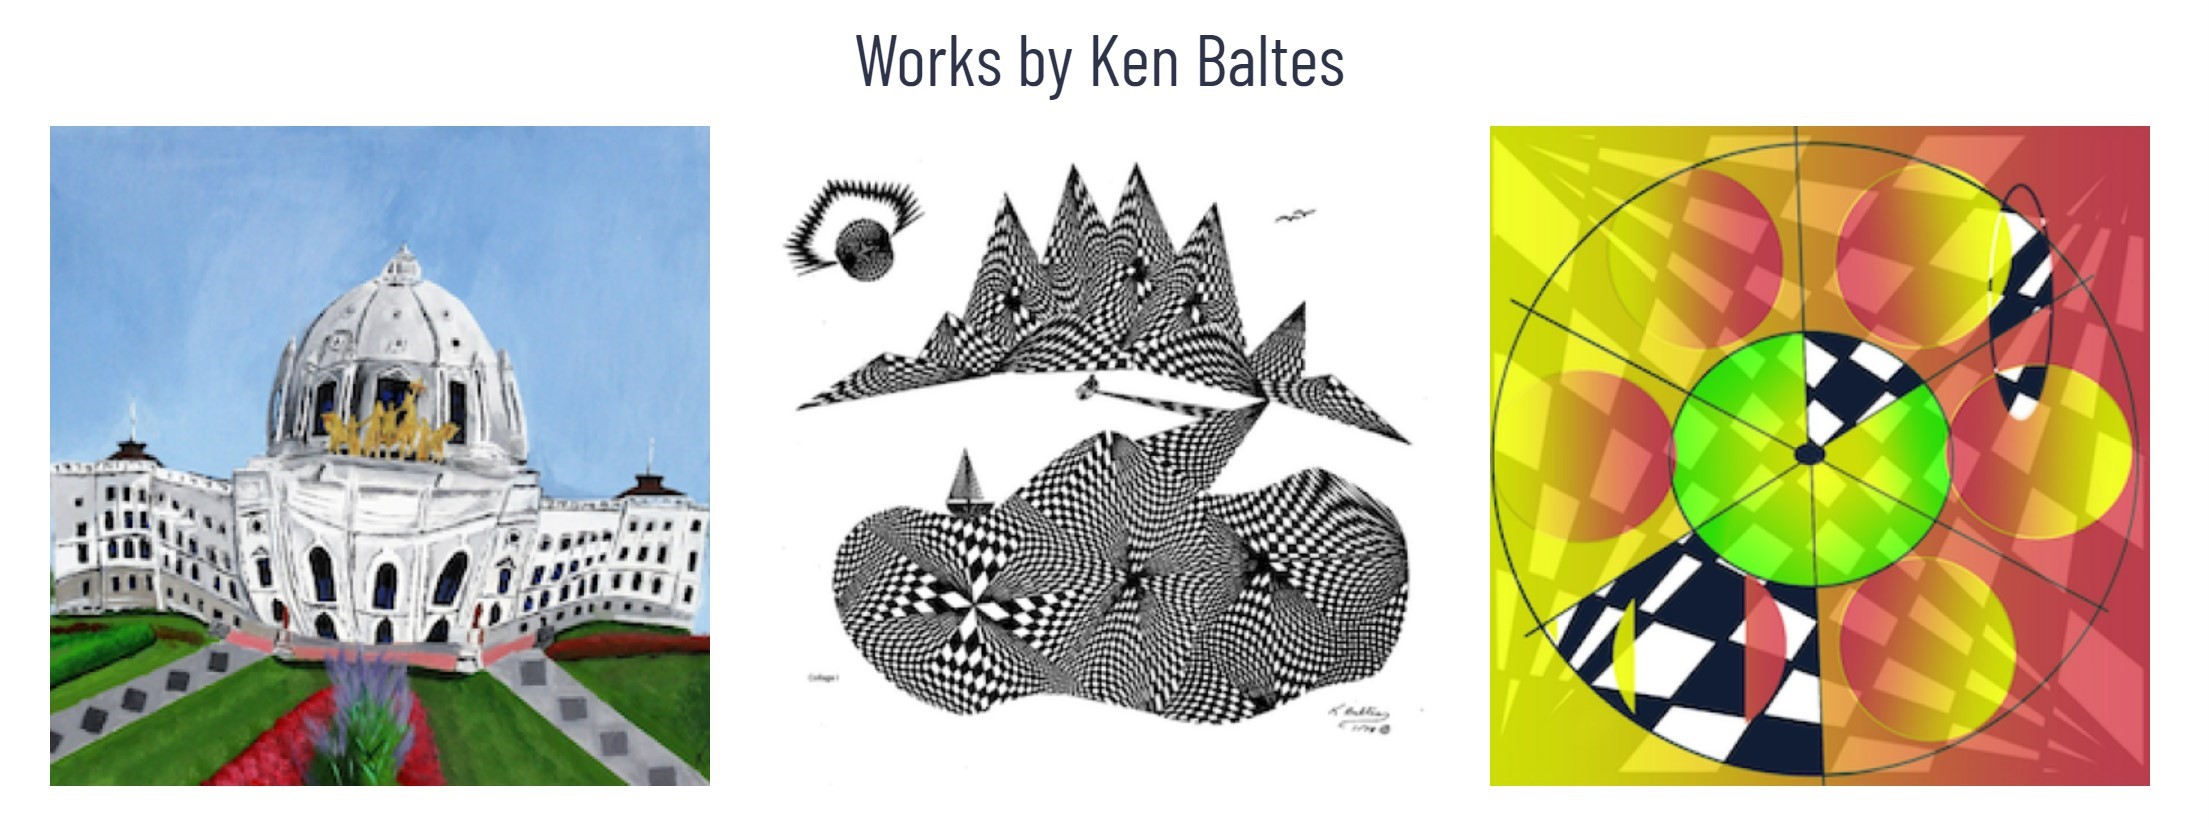 Works-by-Ken-Baltes